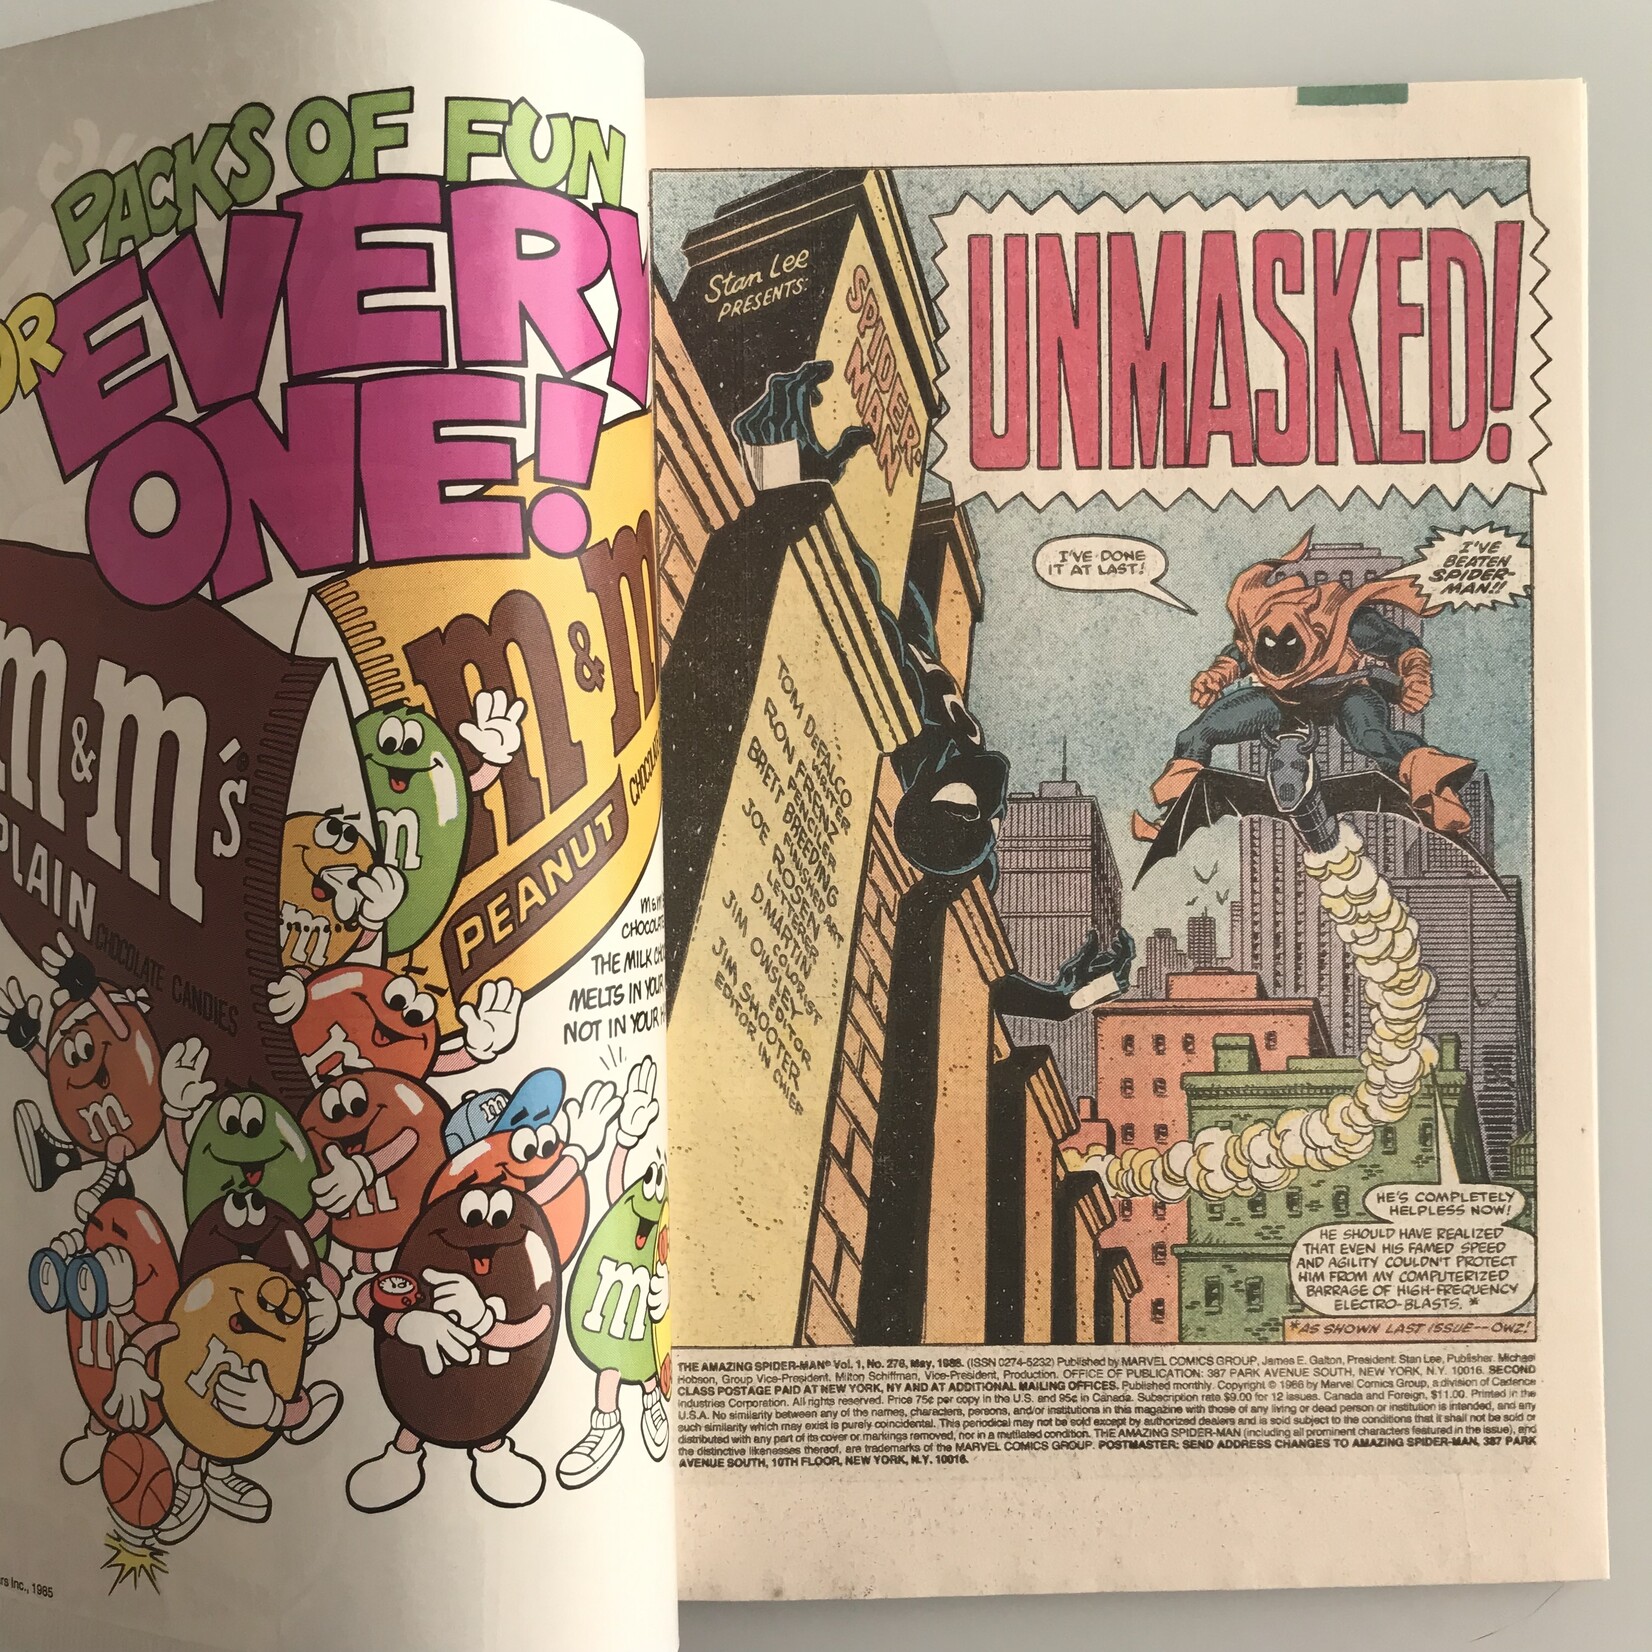 Amazing Spider-Man - Vol. 1 #276 May 1986 - Comic Book